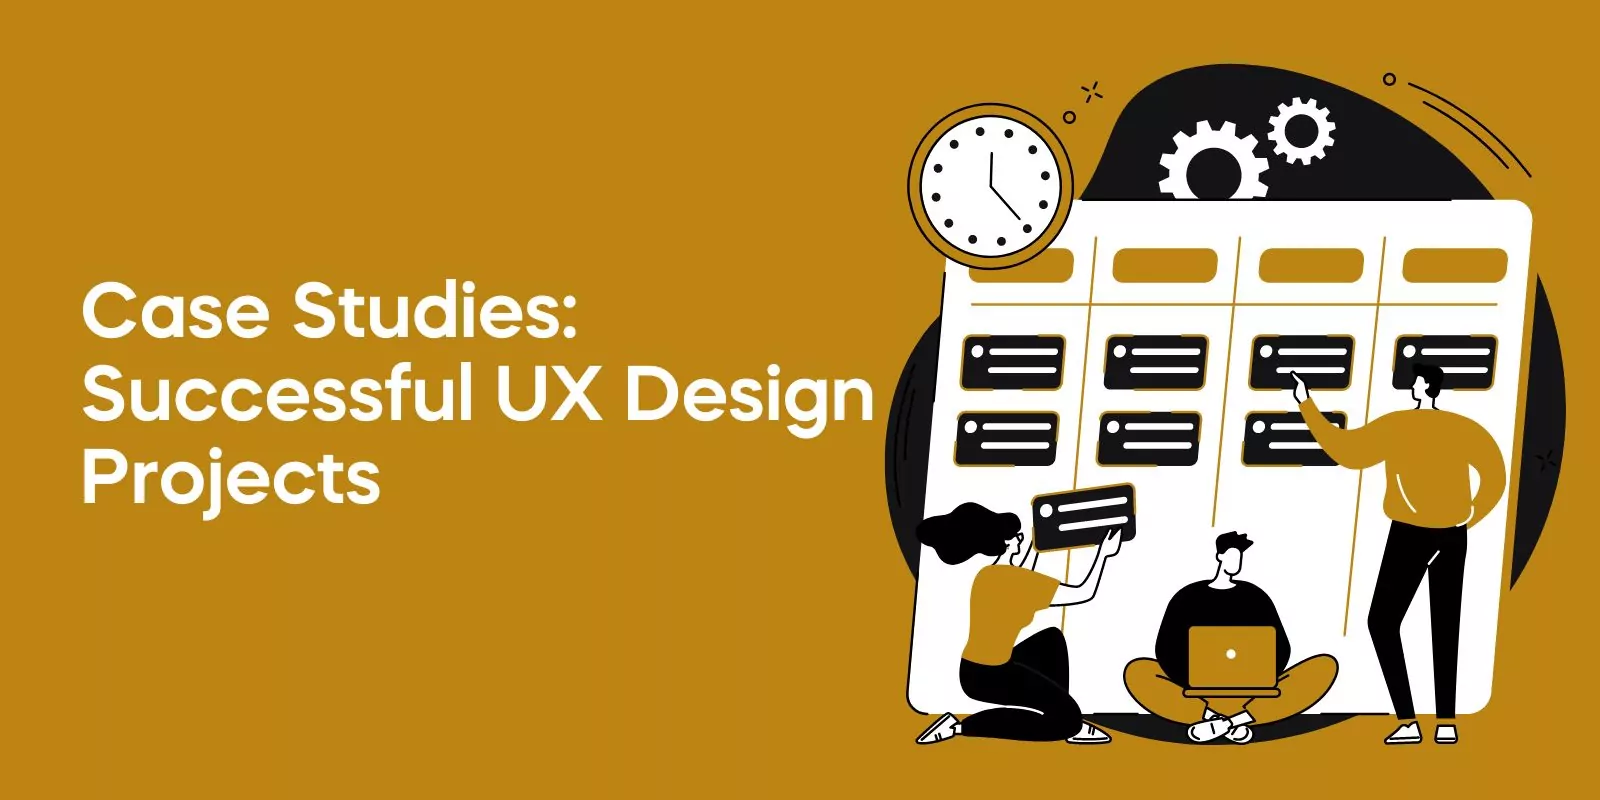 Case Studies: Successful UX Design Projects